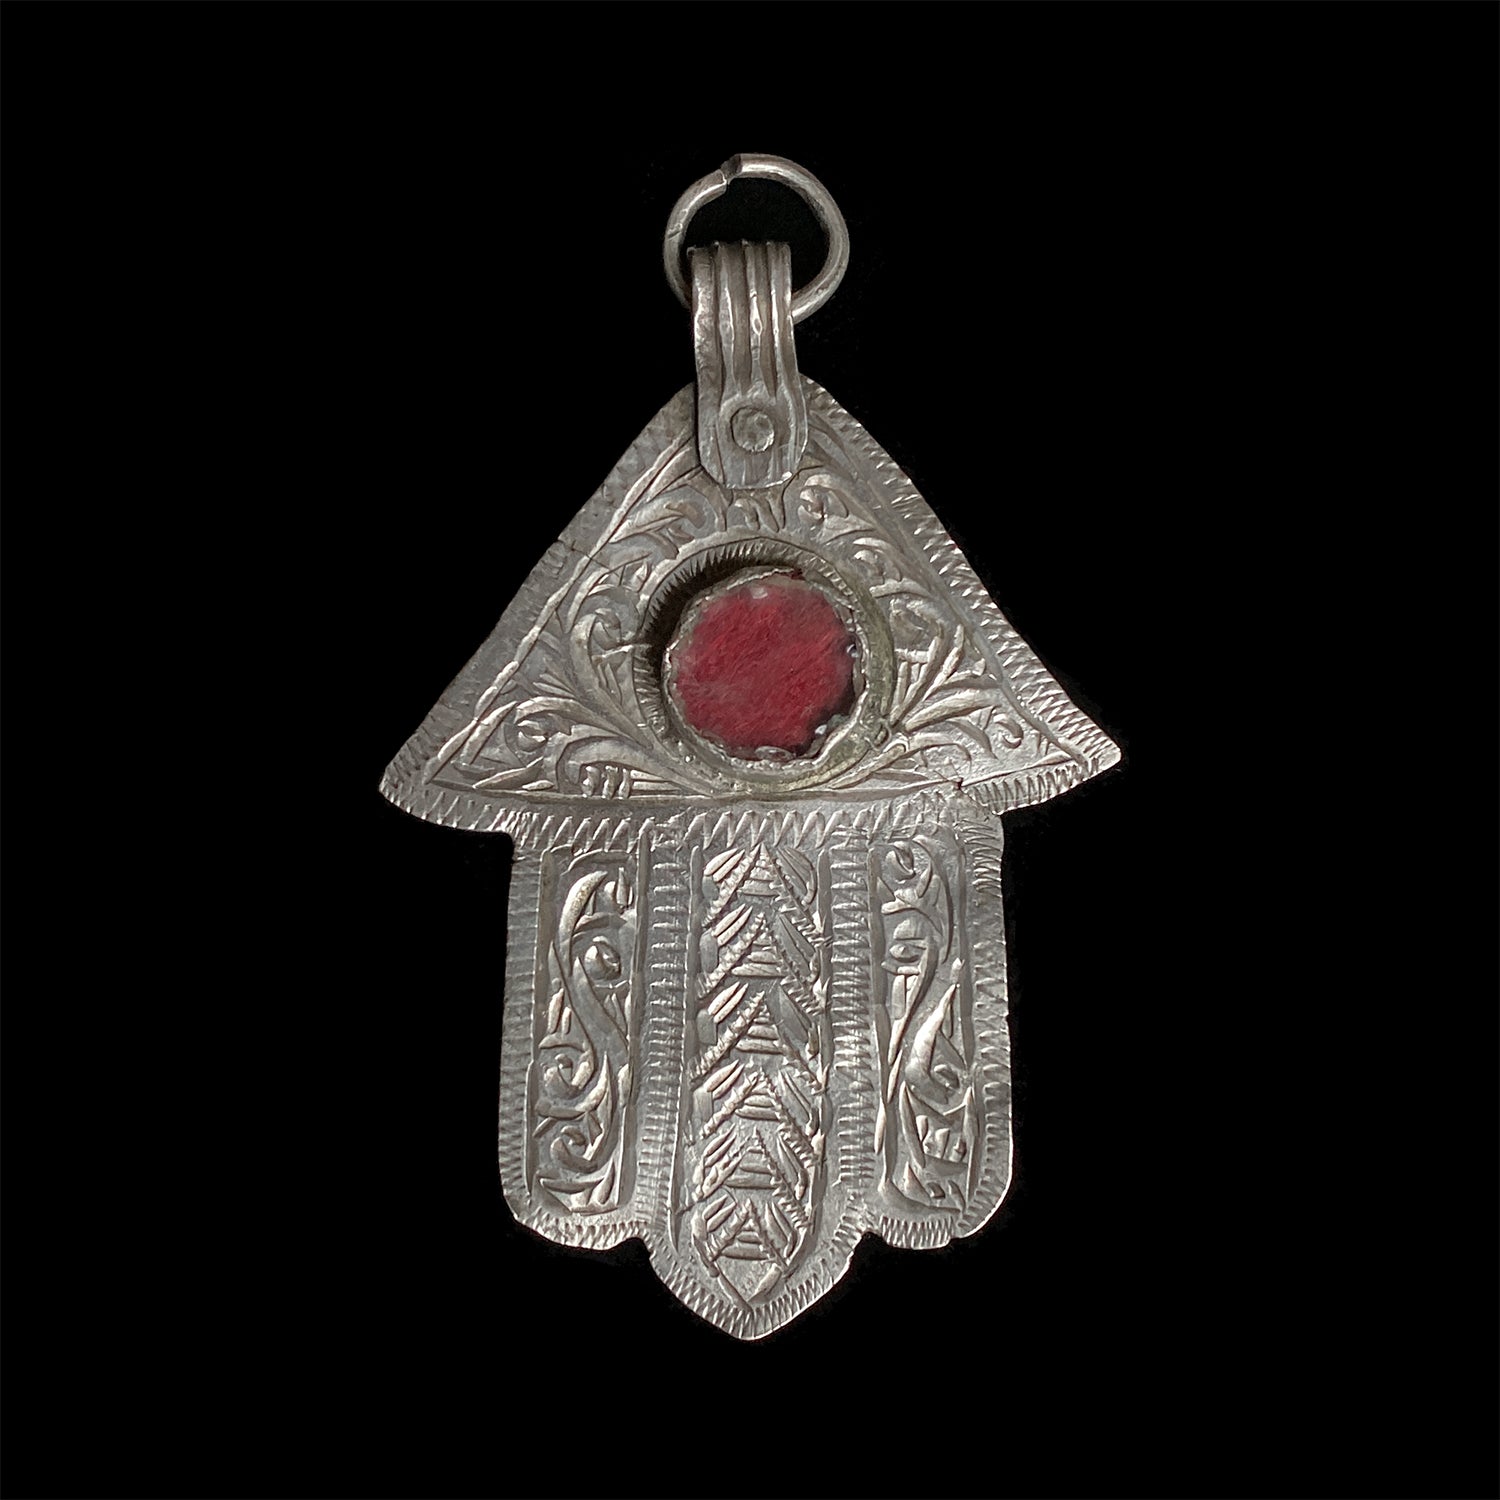 Vintage khamsa pendant from Essaouira, Morocco - large